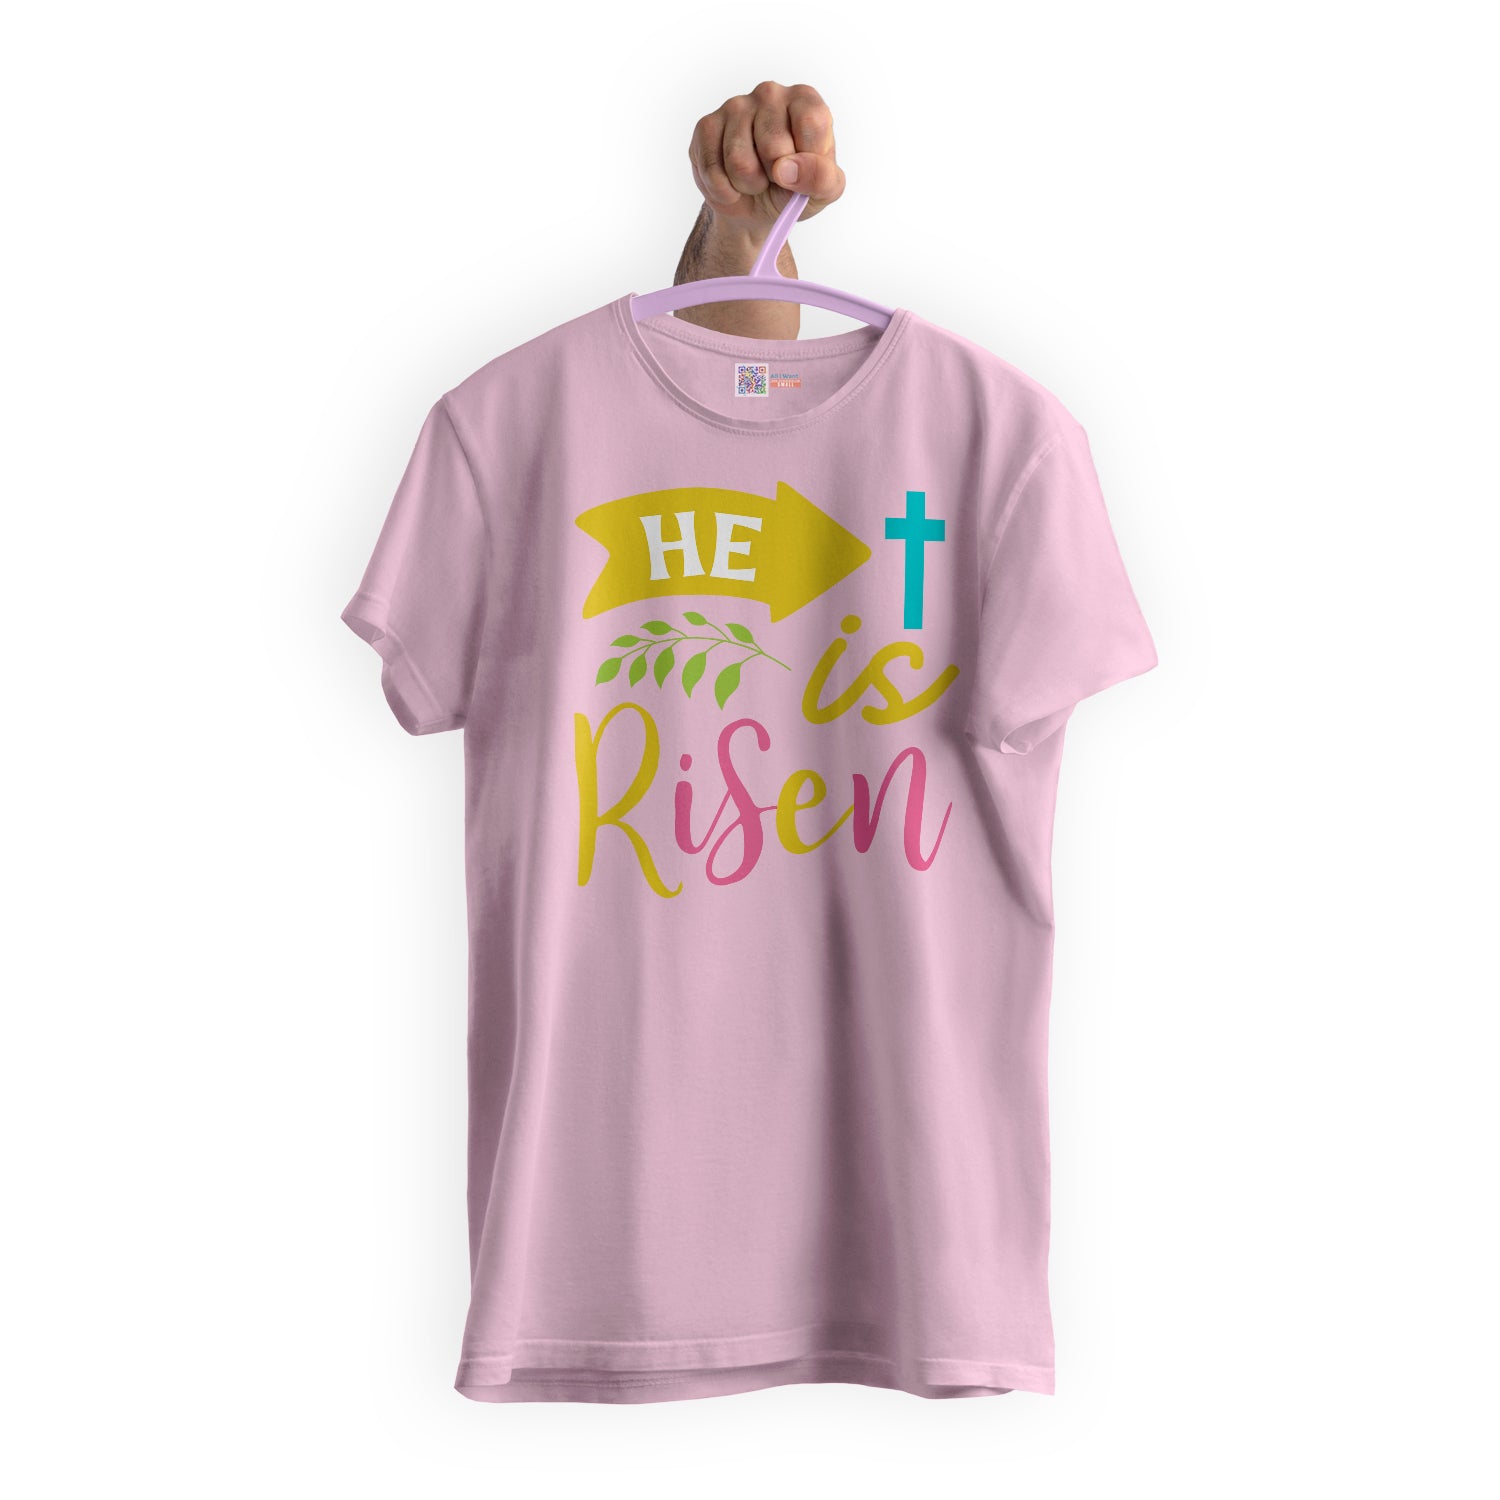 He Is Risen: Crew Neck Short Sleeve Tee - Comfortable Stylish Christian TShirt - All i Want USA    